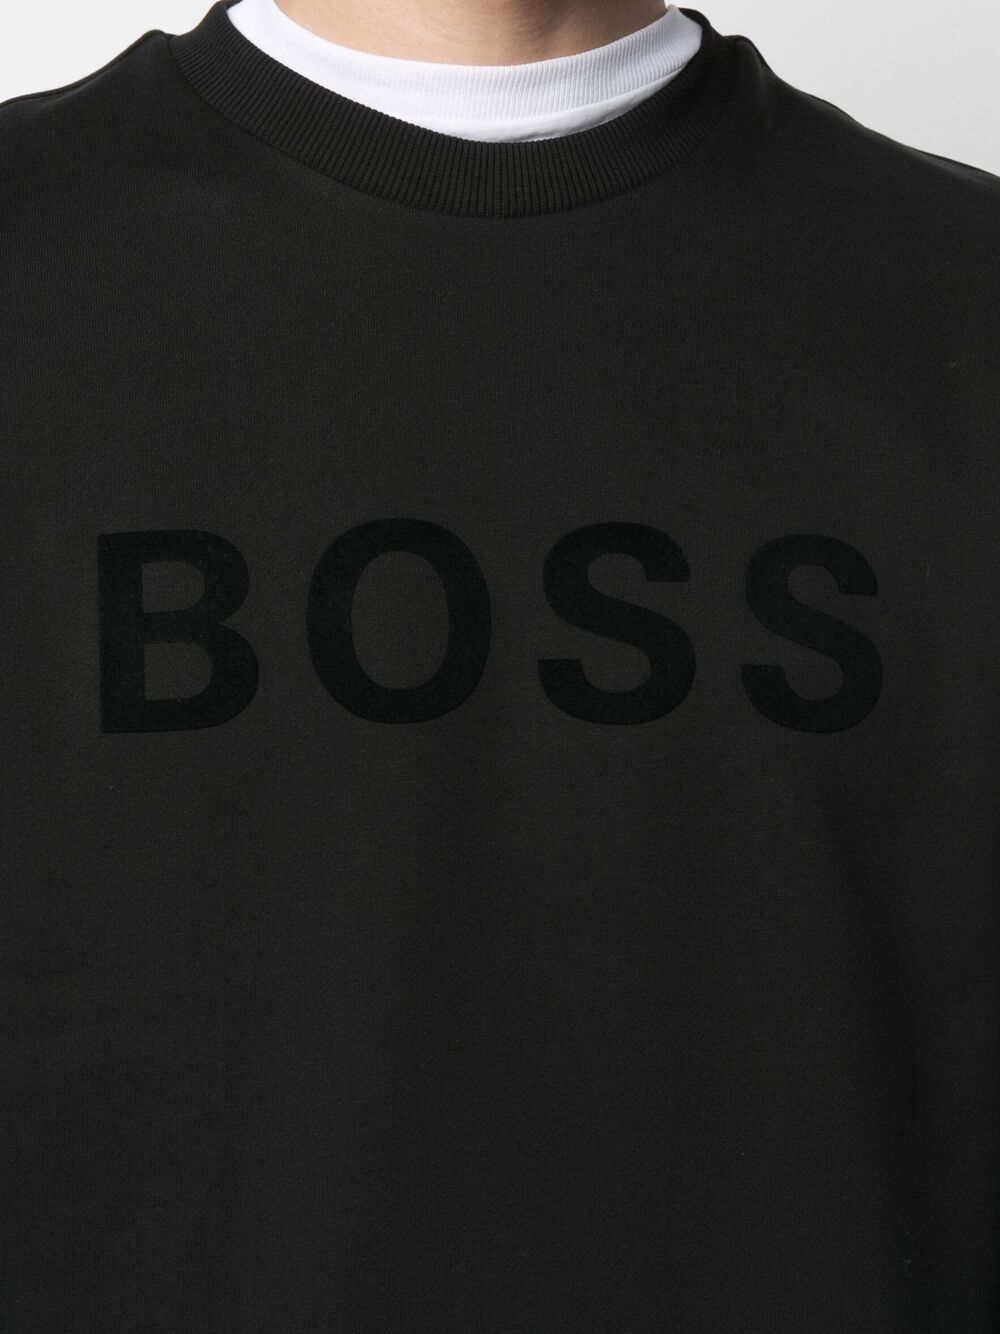 фото Boss hugo boss толстовка с логотипом